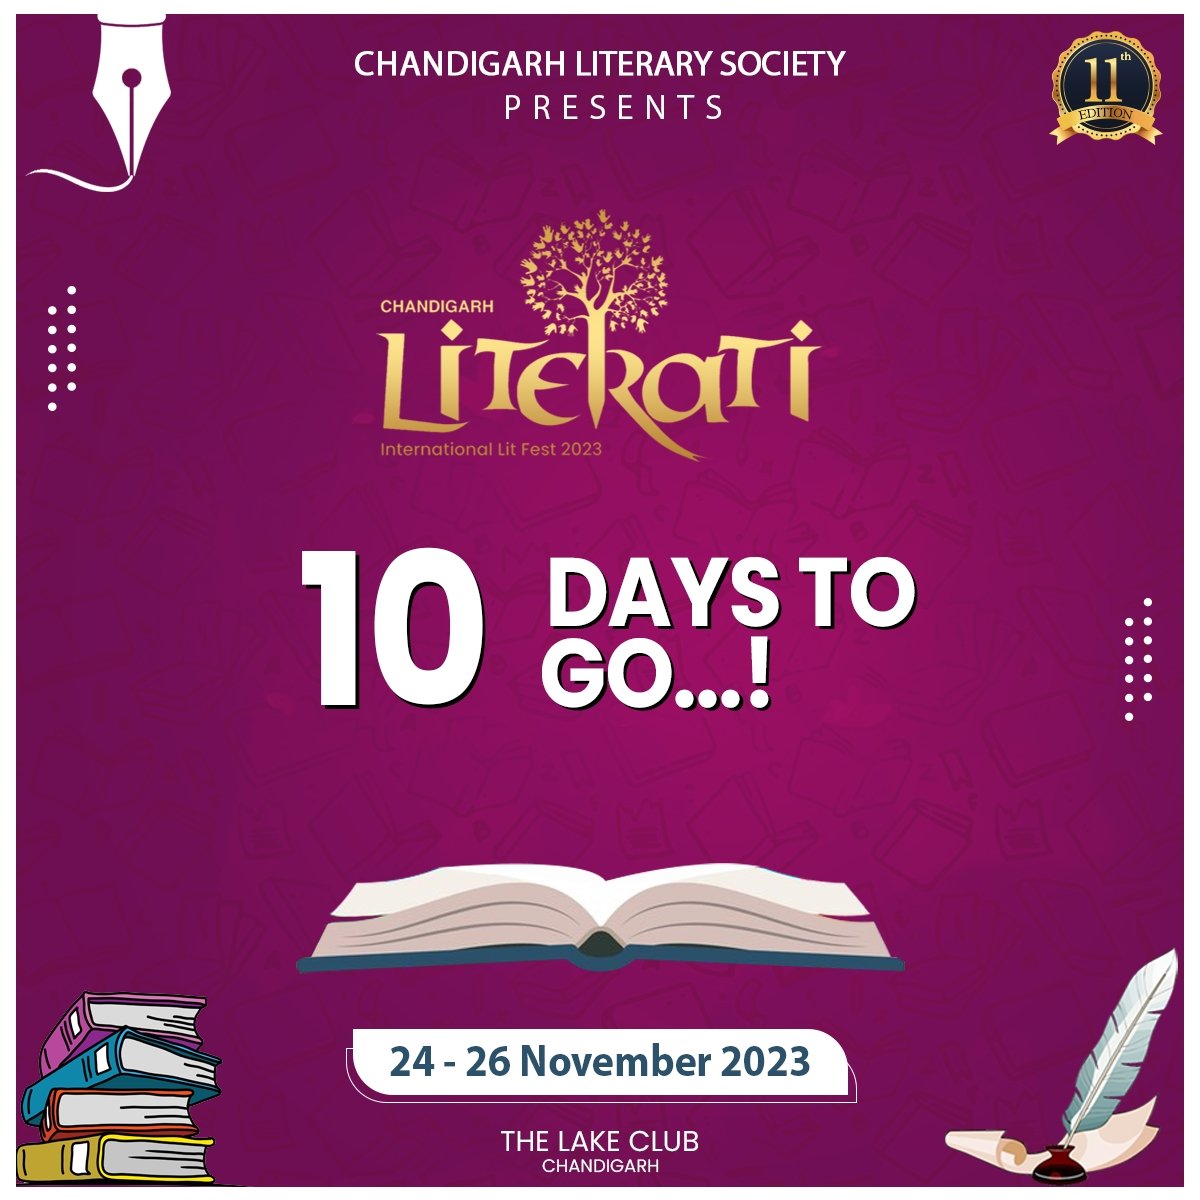 10 days to go......
#literati2023 #clsliterati #litfest #chandigarh #litfest #chandigarhliterarysociety #standupcomedy #internationallitfest #clschandigarh #literati2023 #litfest #ChandigarhLitFest #Chandigarh #LiteraryFest #Litfest #chandigarhliterarysociety #chandigarhlakeclub